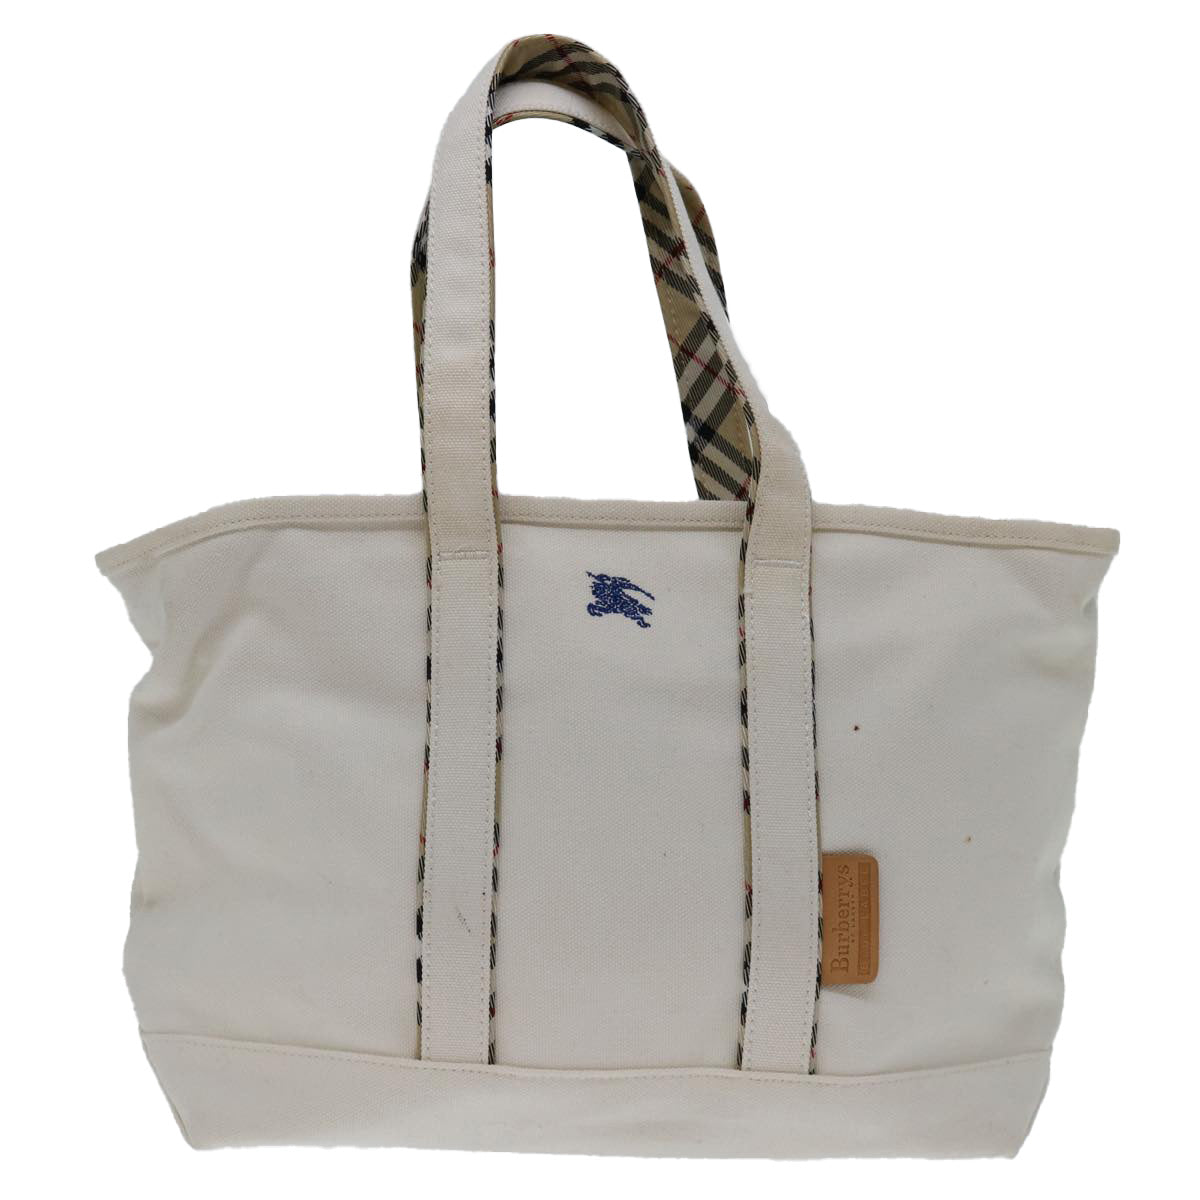 Burberrys Nova Check Blue Label Tote Bag Canvas White Beige Auth bs12787